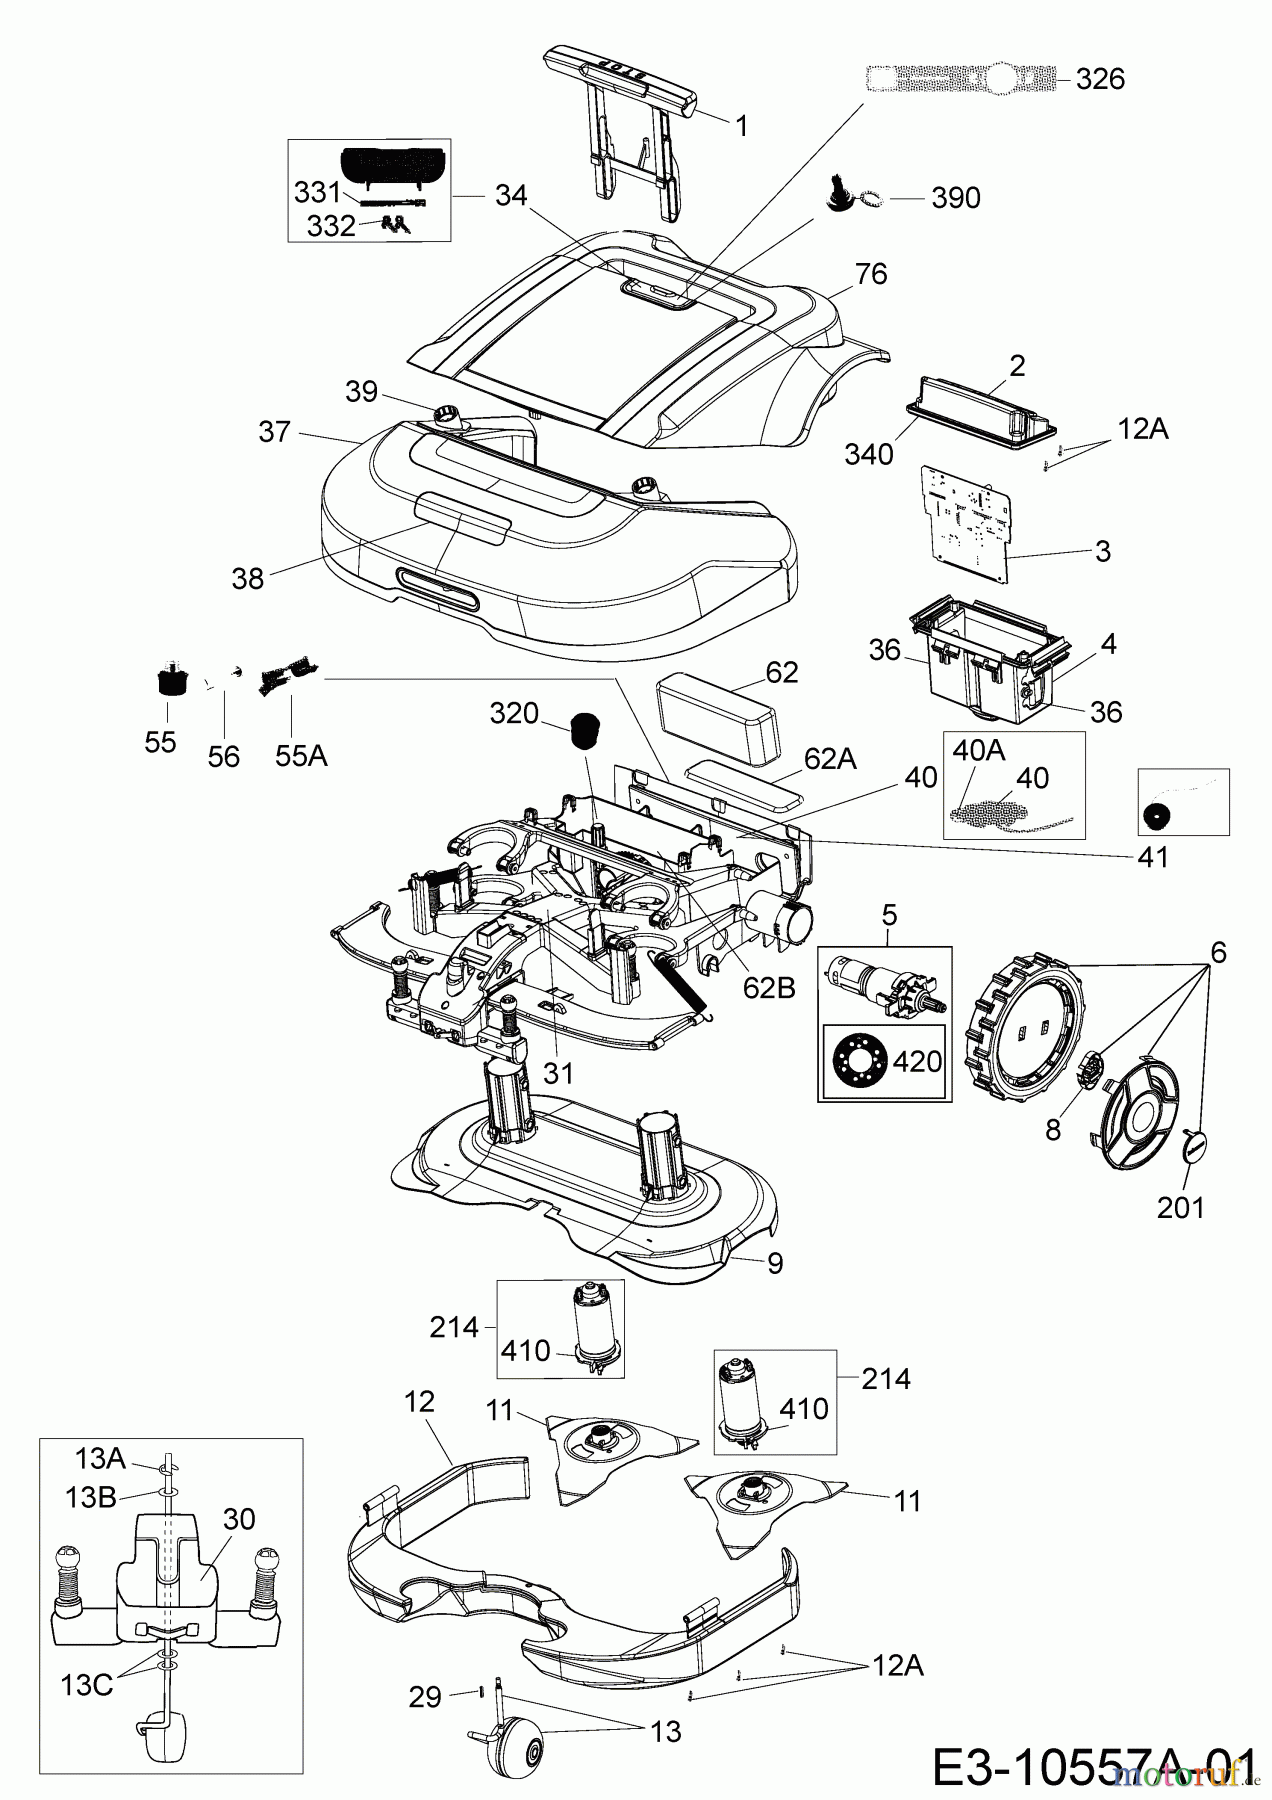  Robomow Robotic lawn mower MS 1800 (White) PRD6200YW   (2014) Basic machine